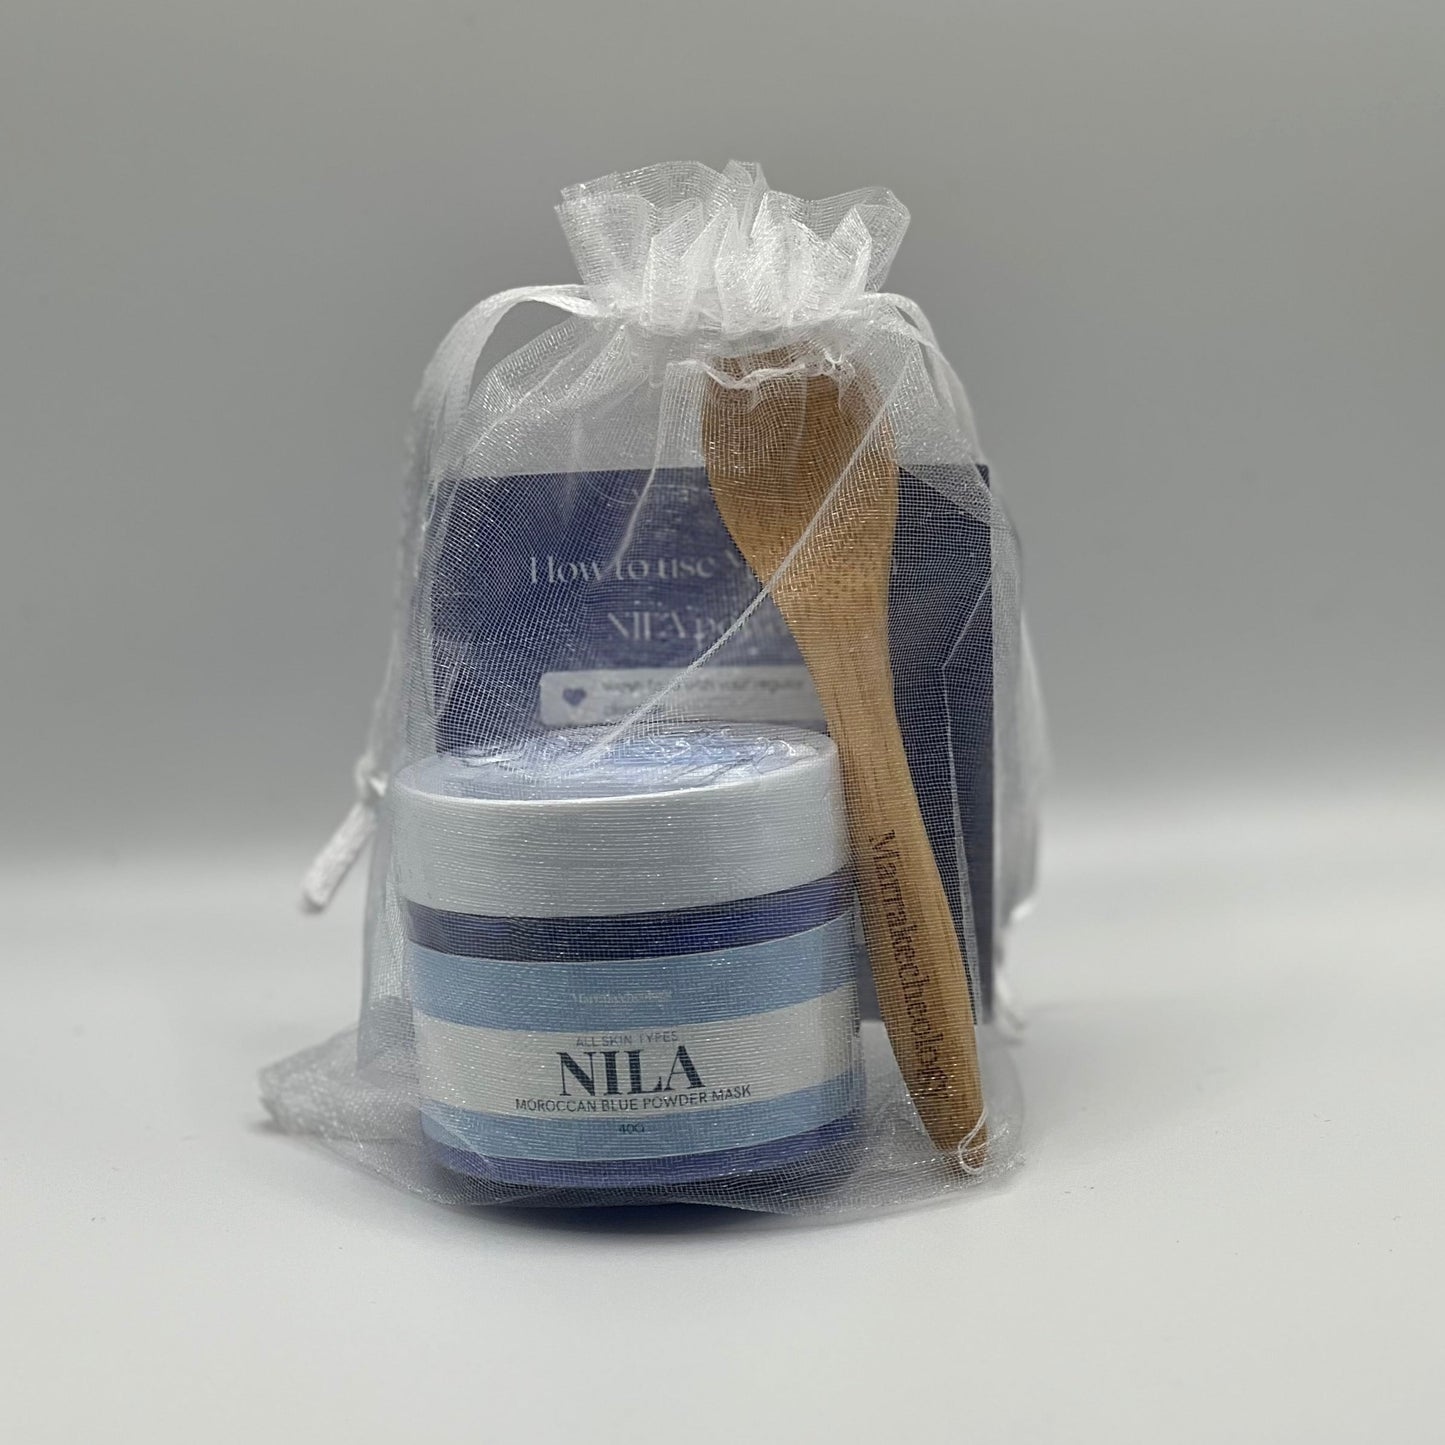 Set NILA Moroccan blue powder mask + bamboo spoon